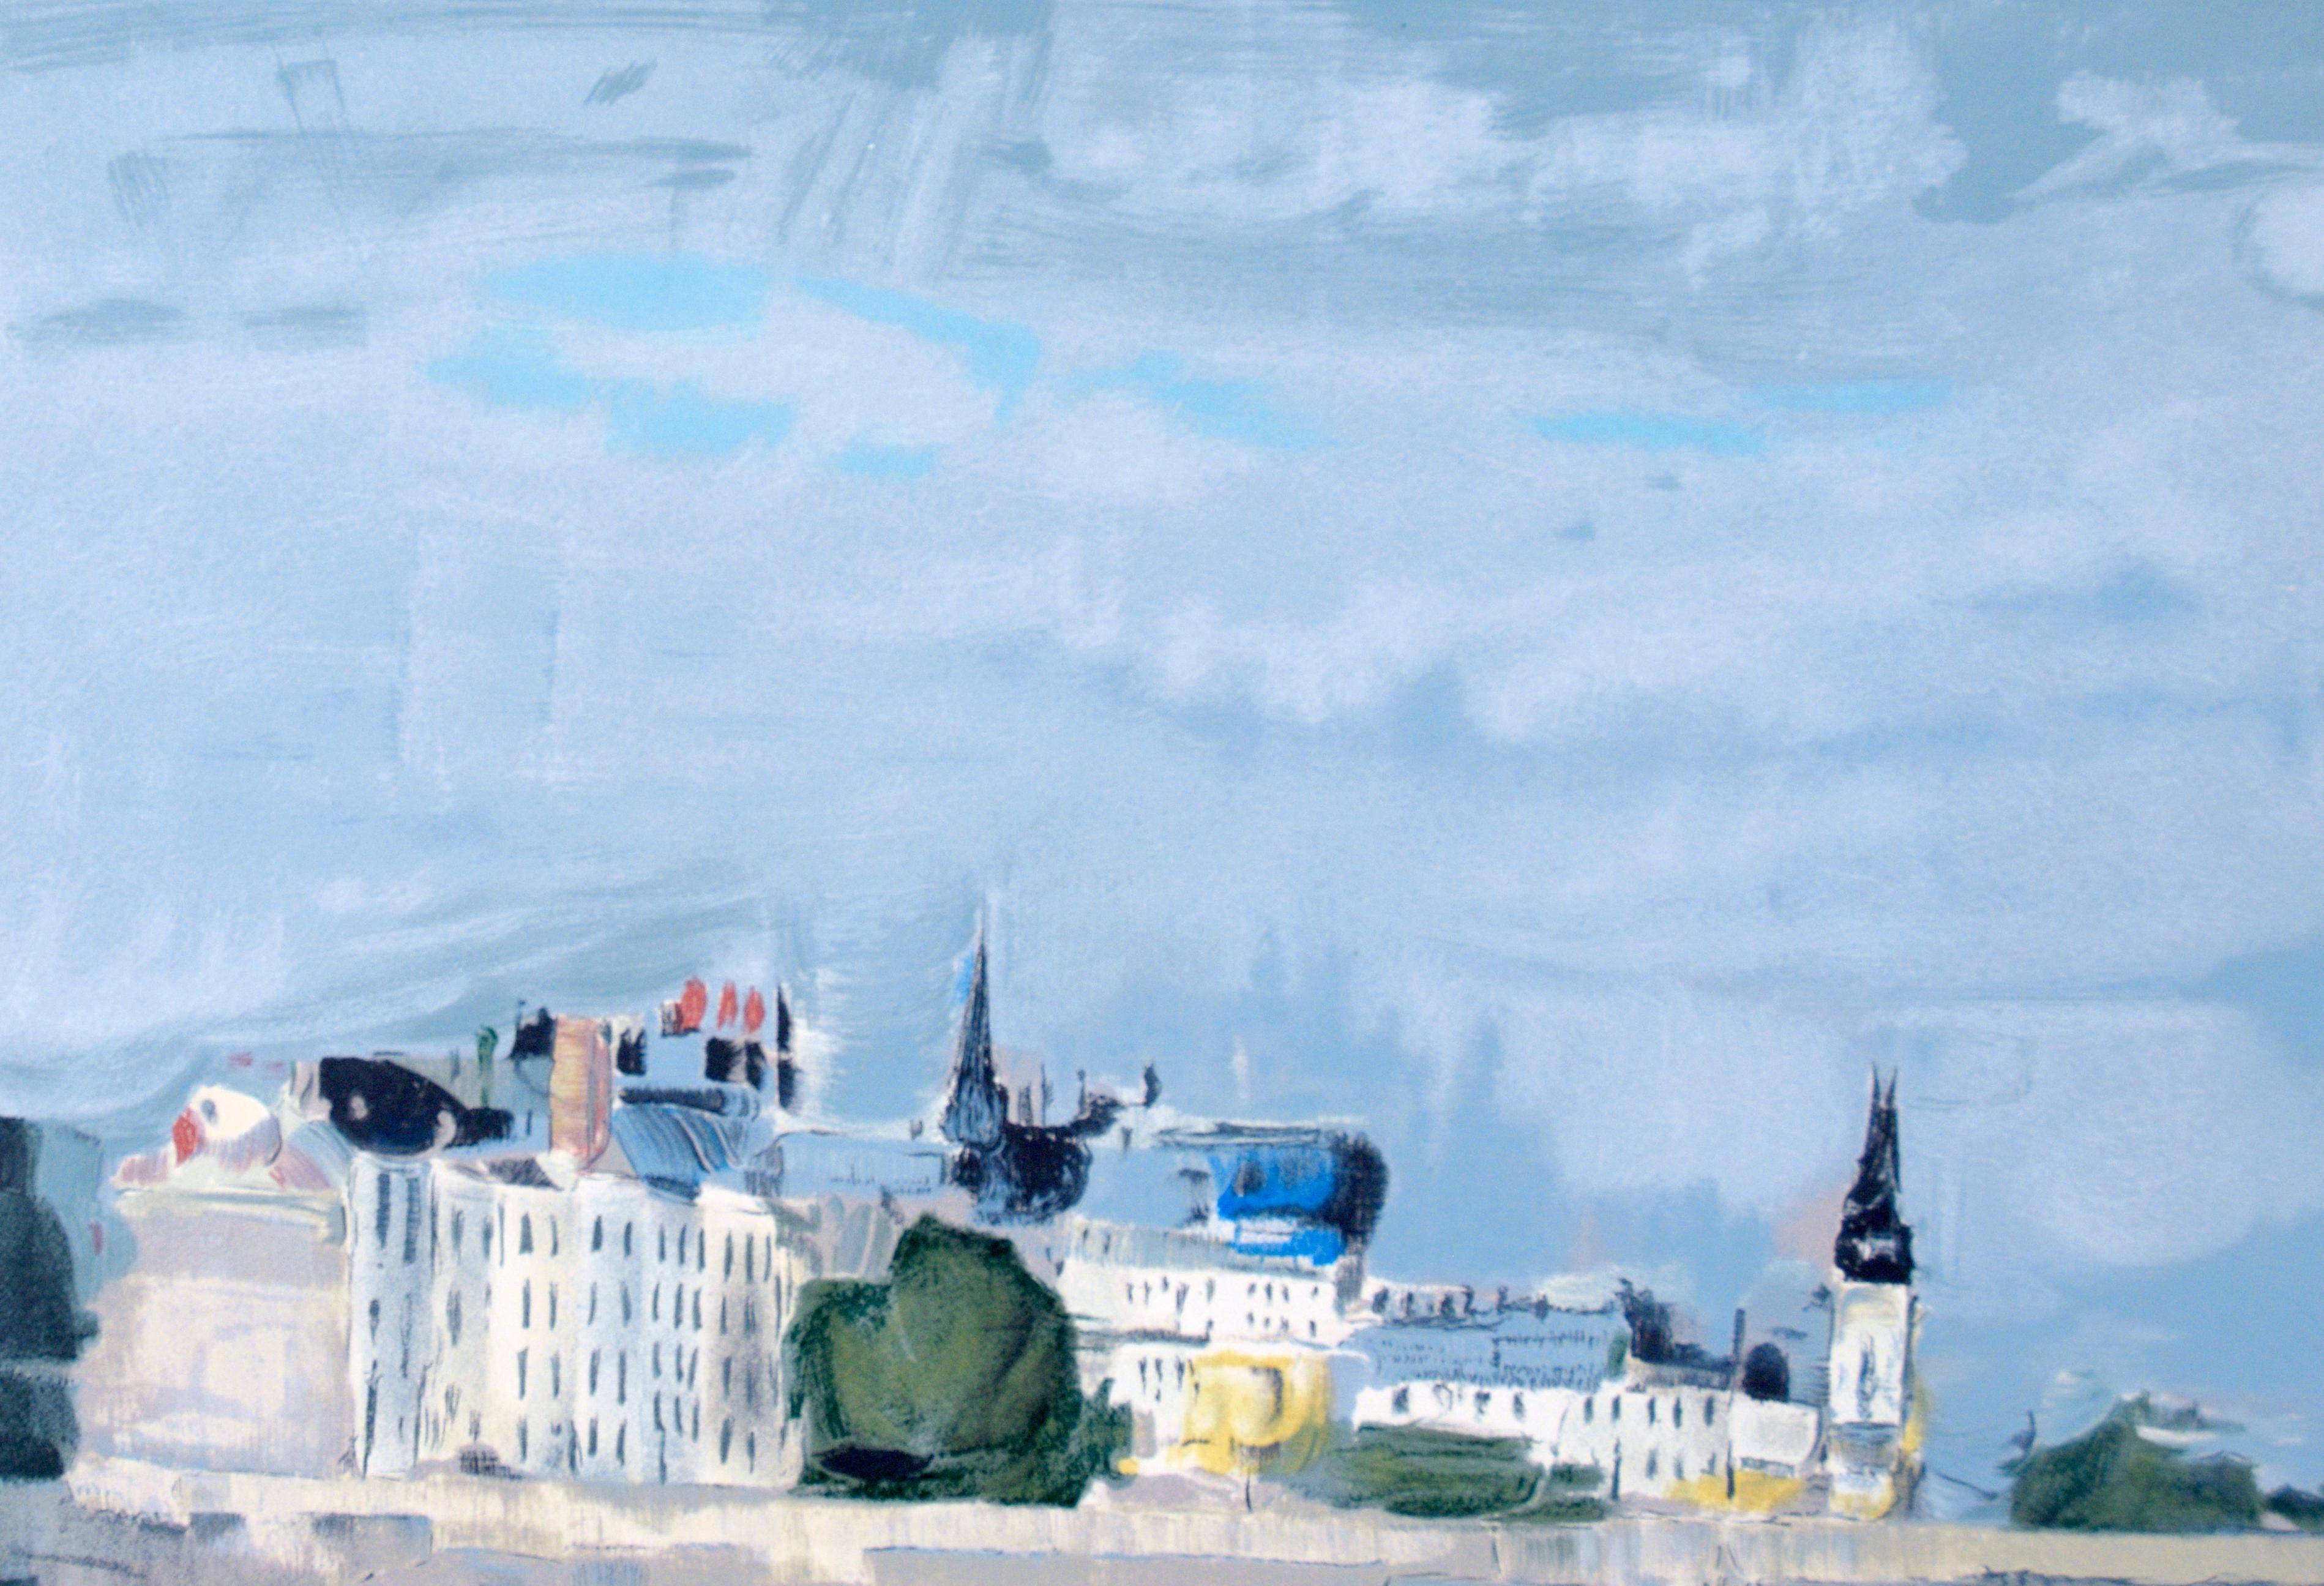 Impressionistische Landschaft der Pariser Flussufer, Lithographie auf Papier, „Bord de Fleuve“ – Print von Jacques Voyet